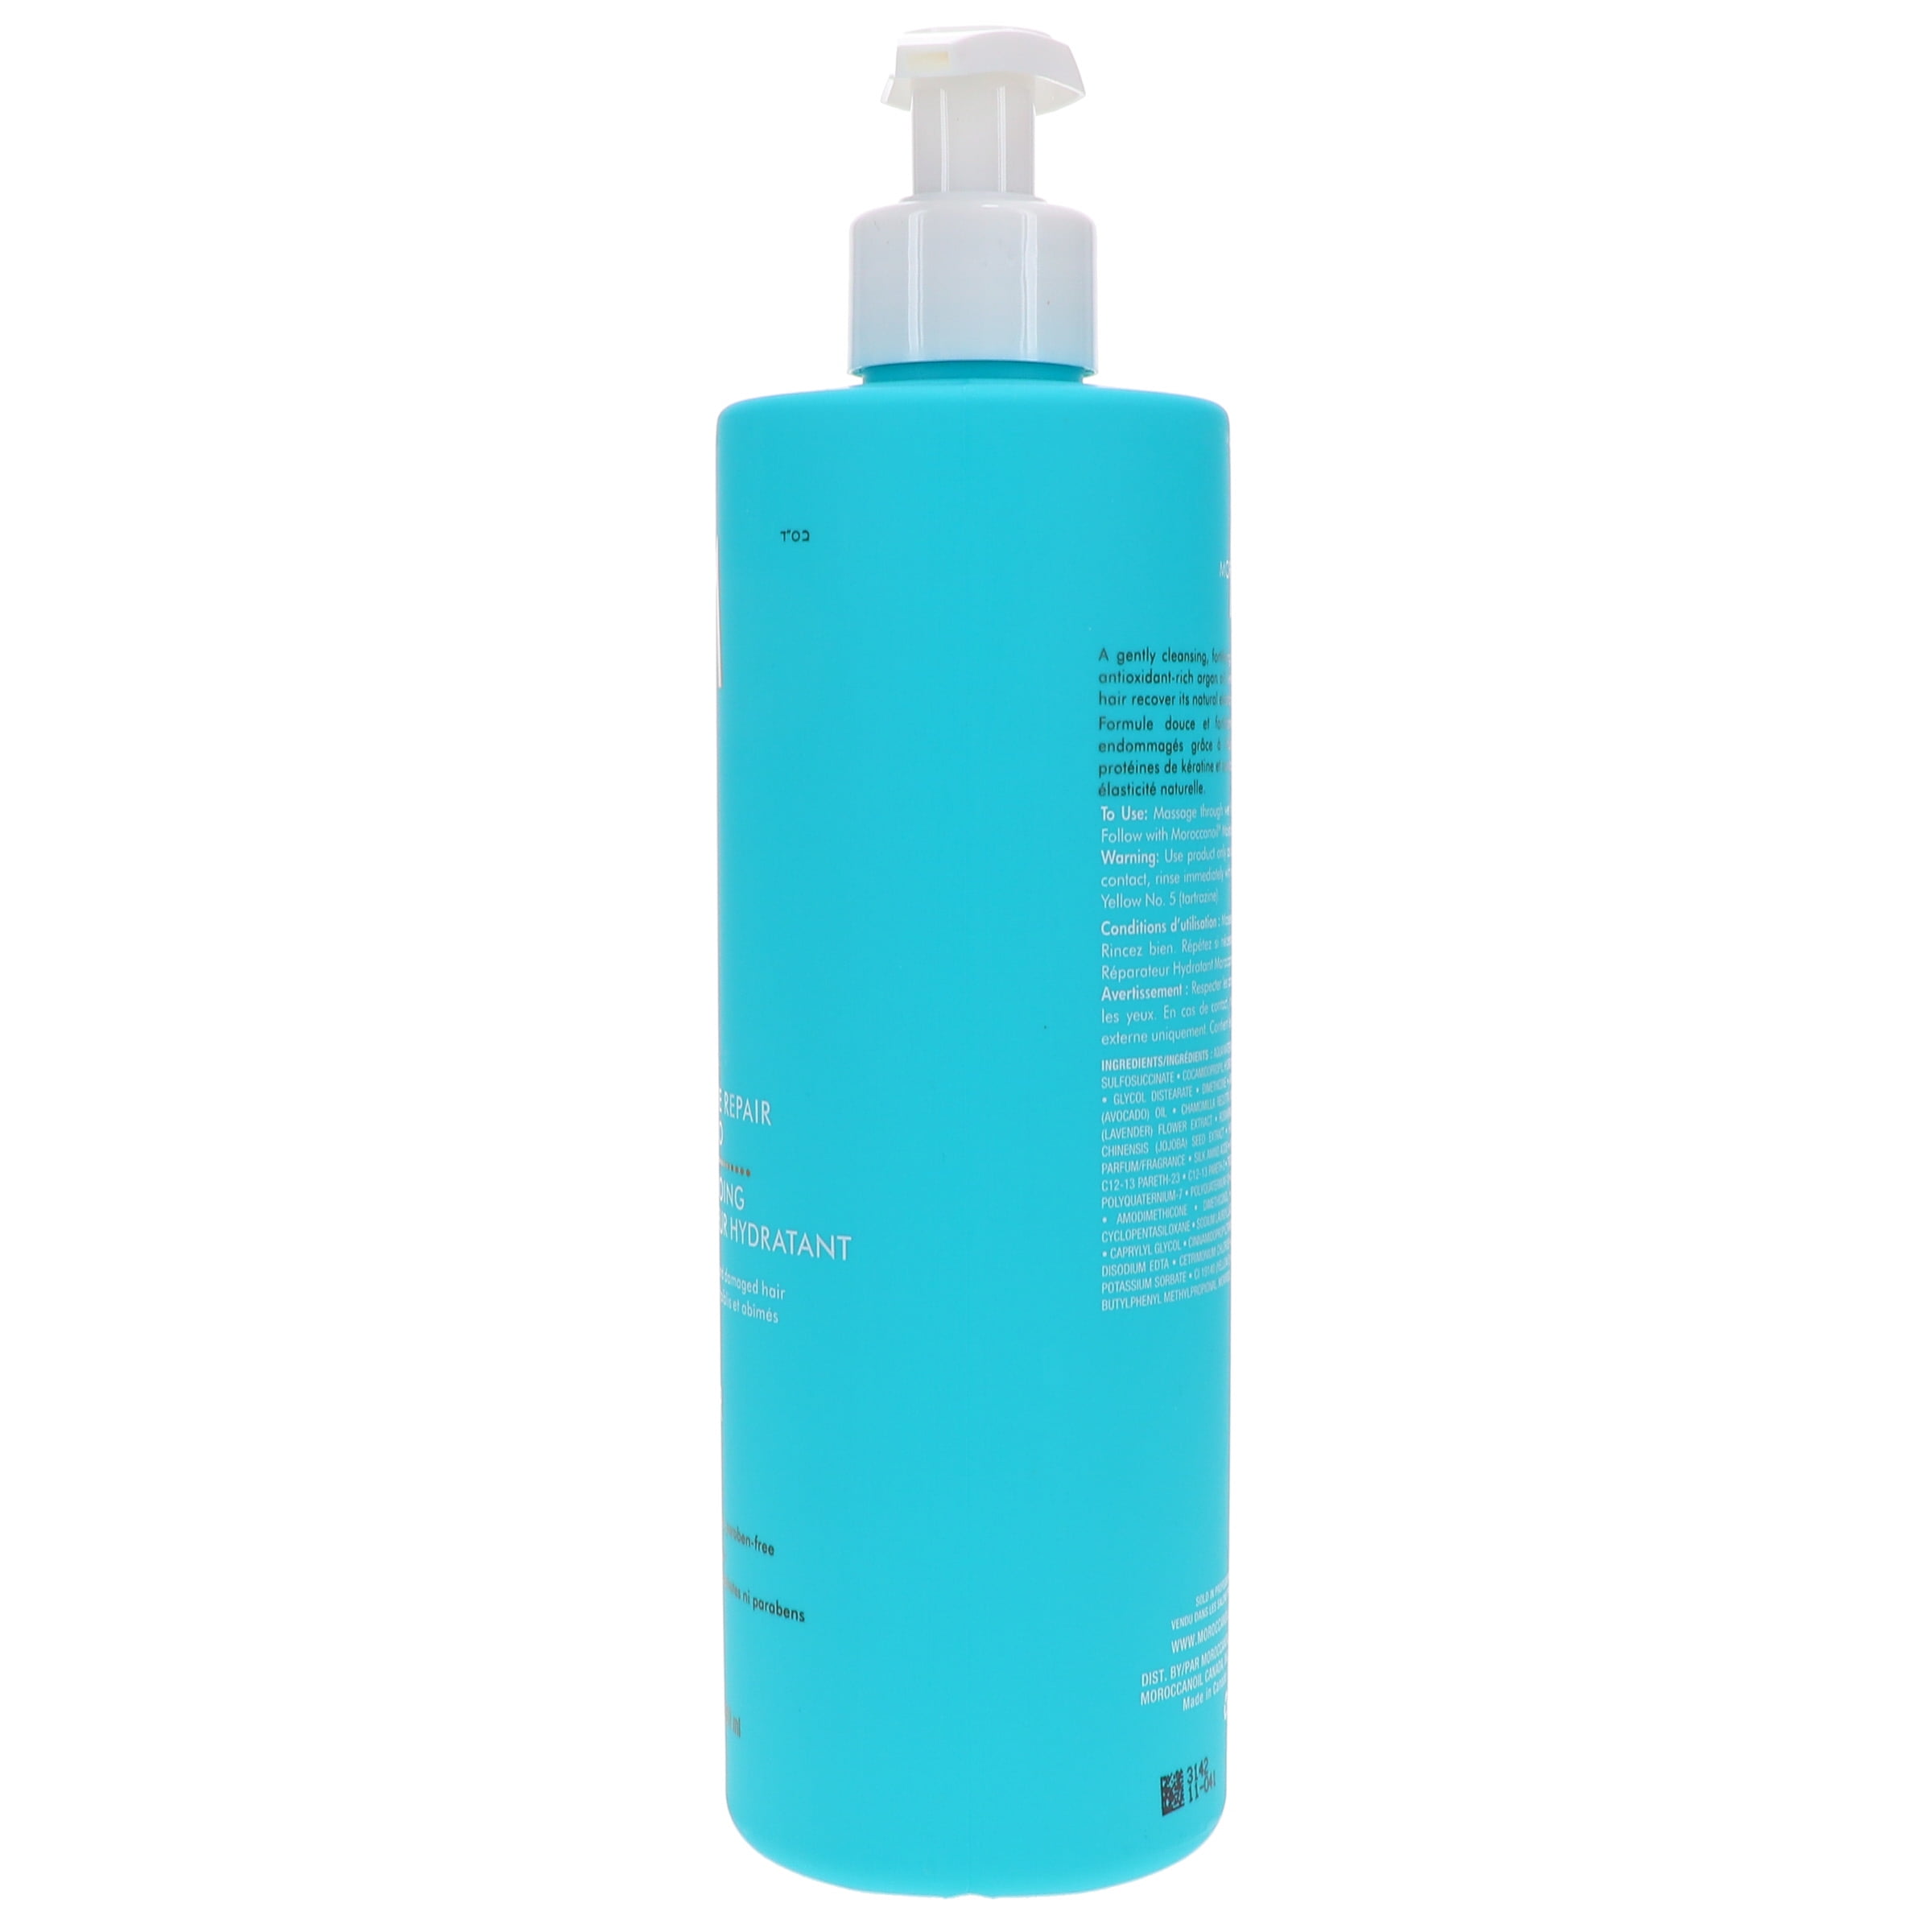 Moroccanoil Moisture Repair Shampoo – bluemercury